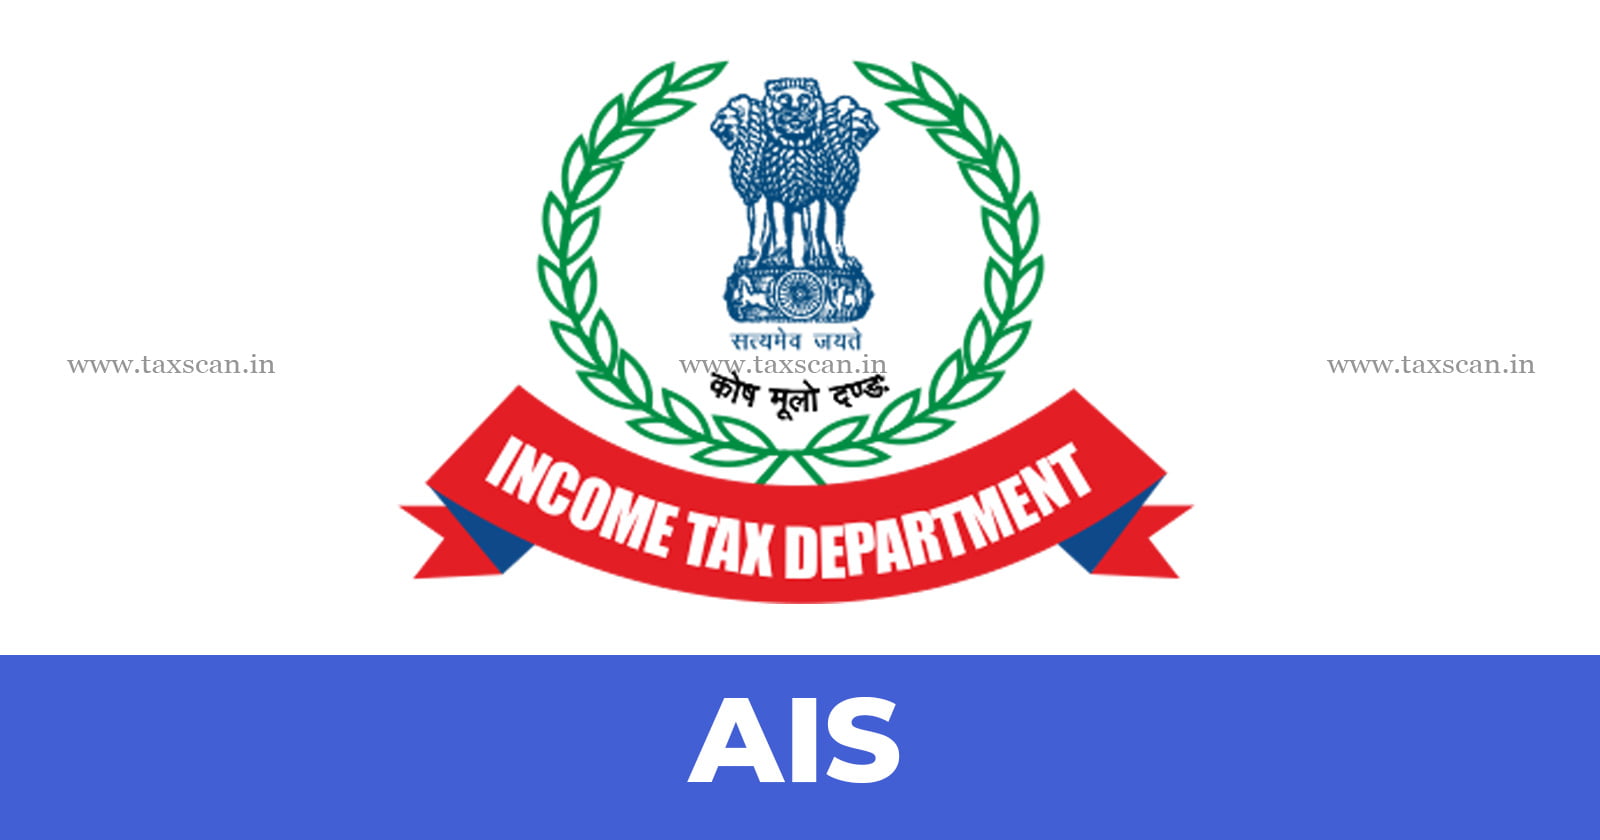 Concerns - Displayed Financial Transactions - Financial Transactions - AIS - Concerns about Displayed Financial Transactions in AIS - Income Tax Dept - Income Tax - taxscan